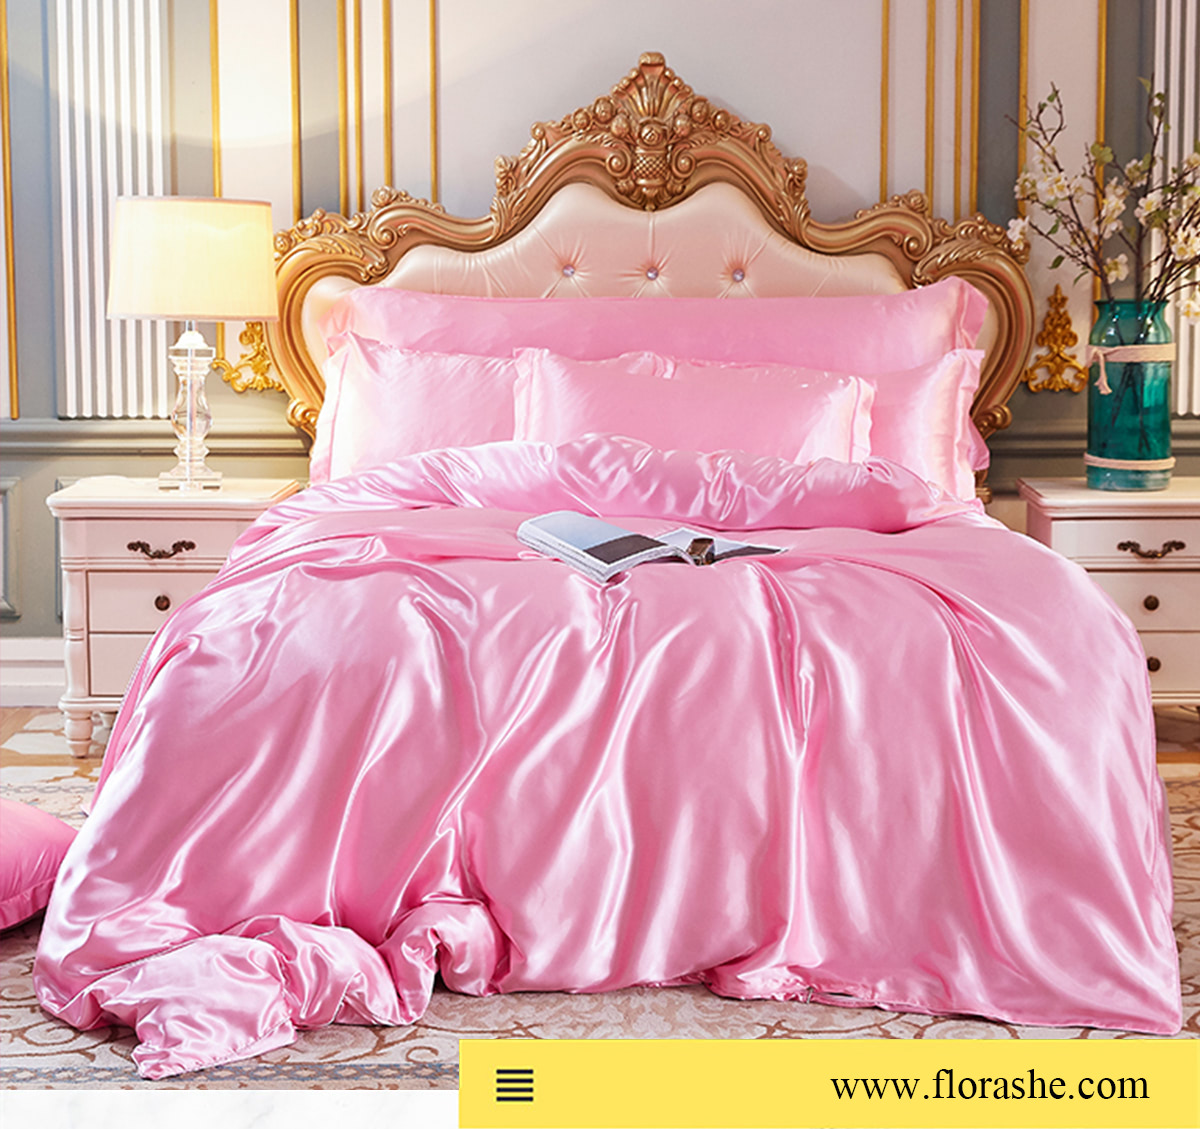 Home-Textile-Simple-Satin-Bedding-Set-Quilt-Cover-Pillowcases11.jpg